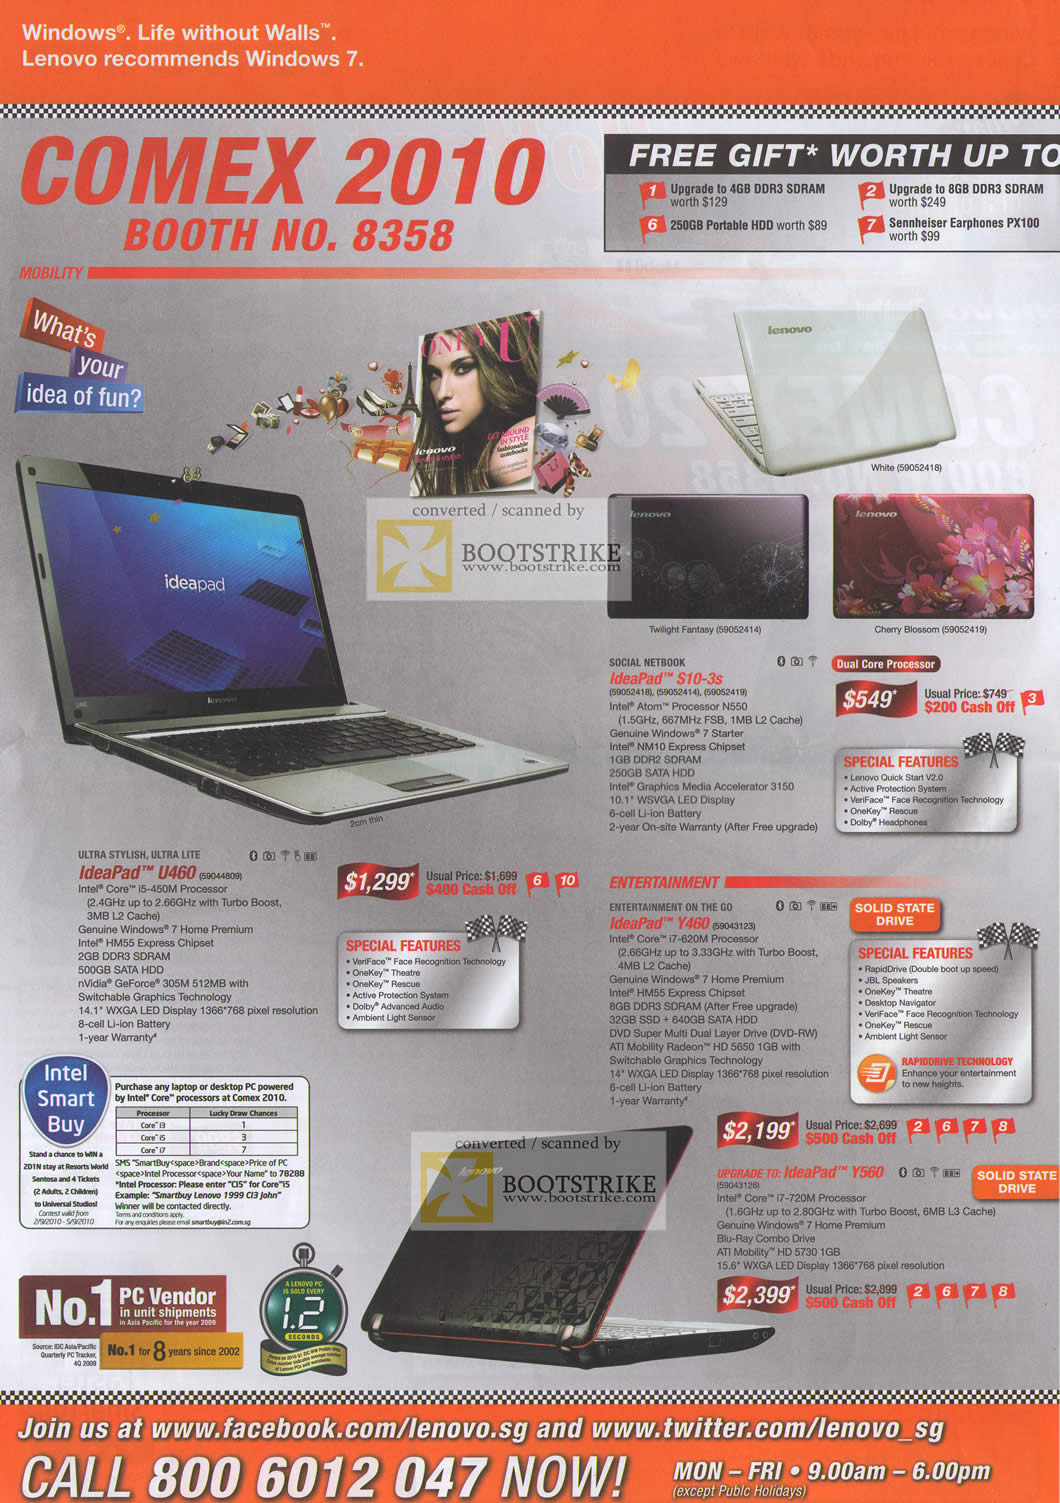 Comex 2010 price list image brochure of Lenovo Notebooks Ideapad S10 3s U460 Y460 Y560